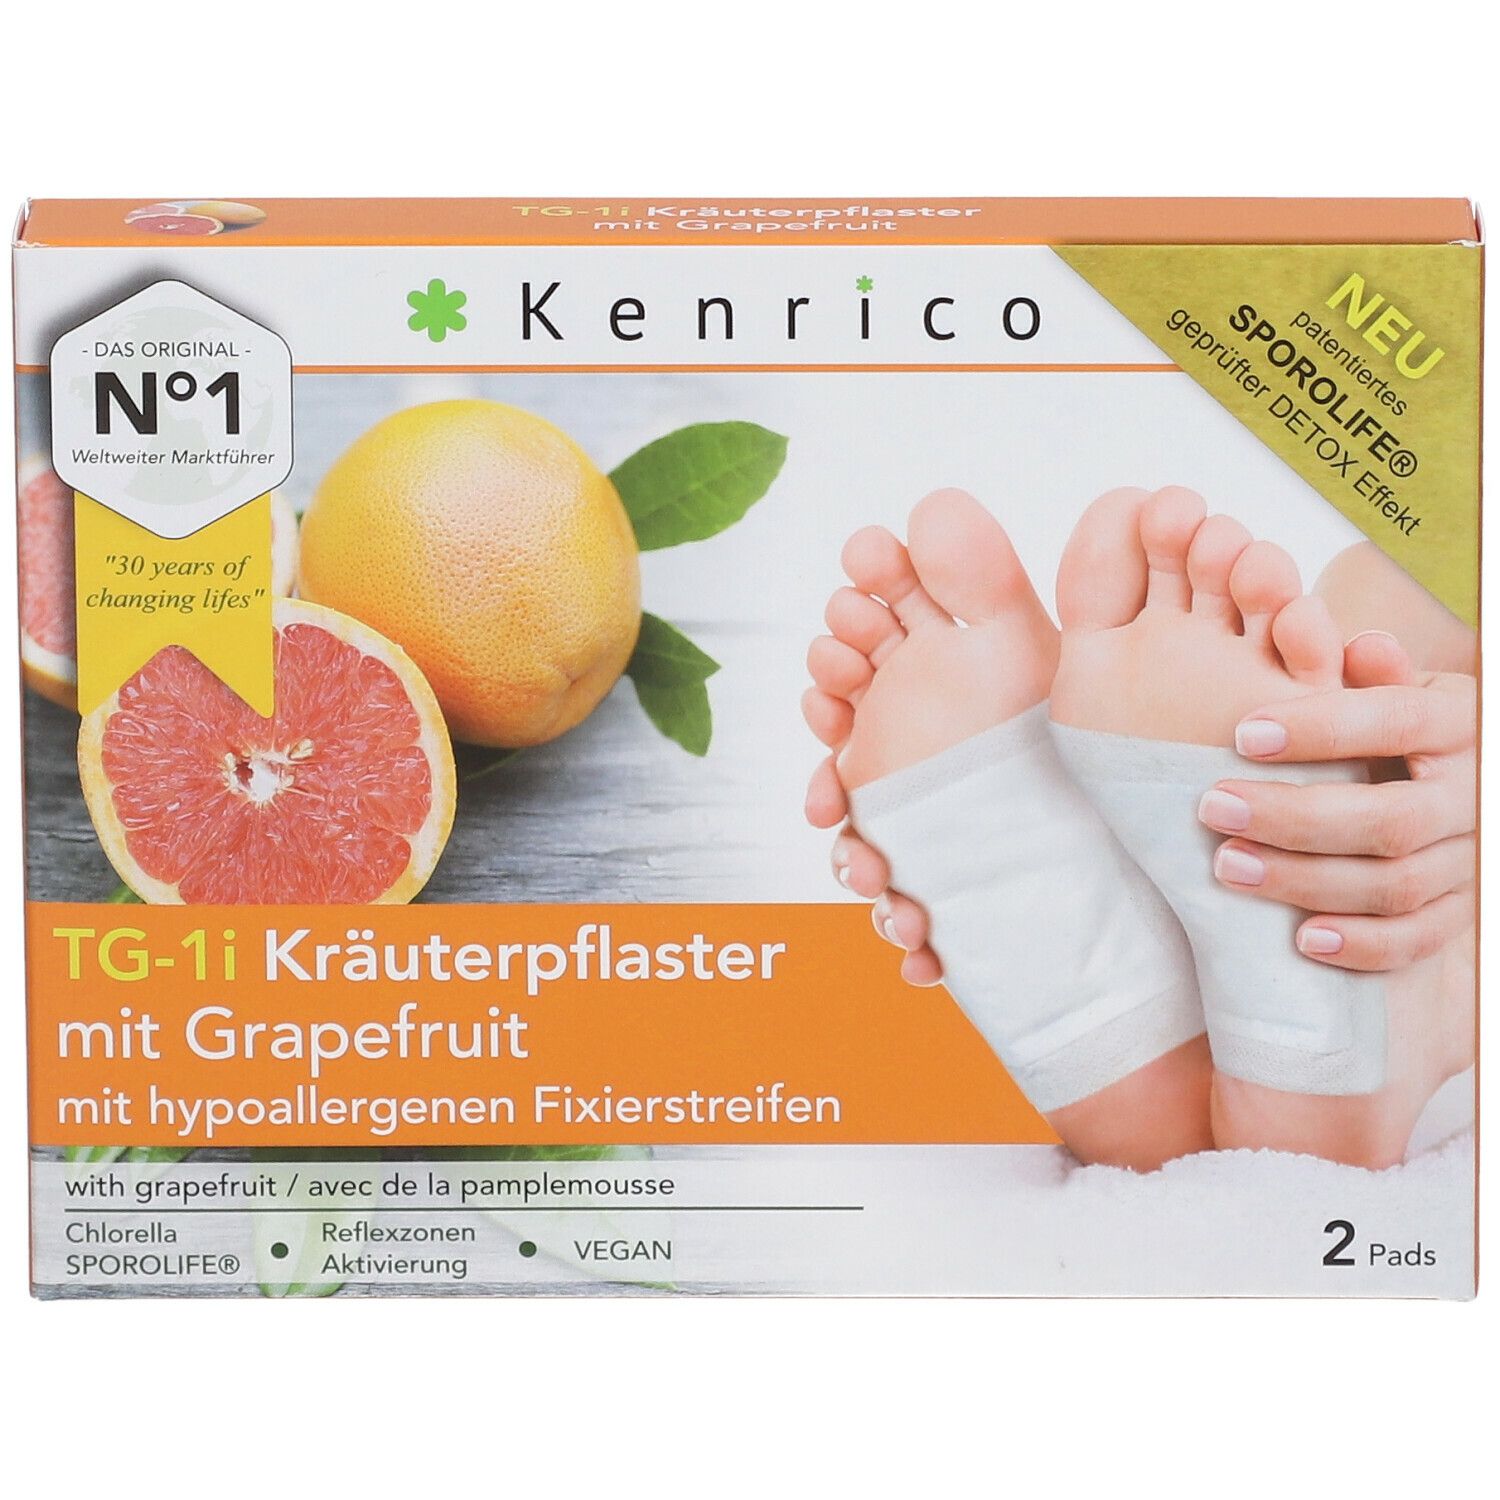 Kenrico TG-1i Kräuterpflaster mit Grapefruit